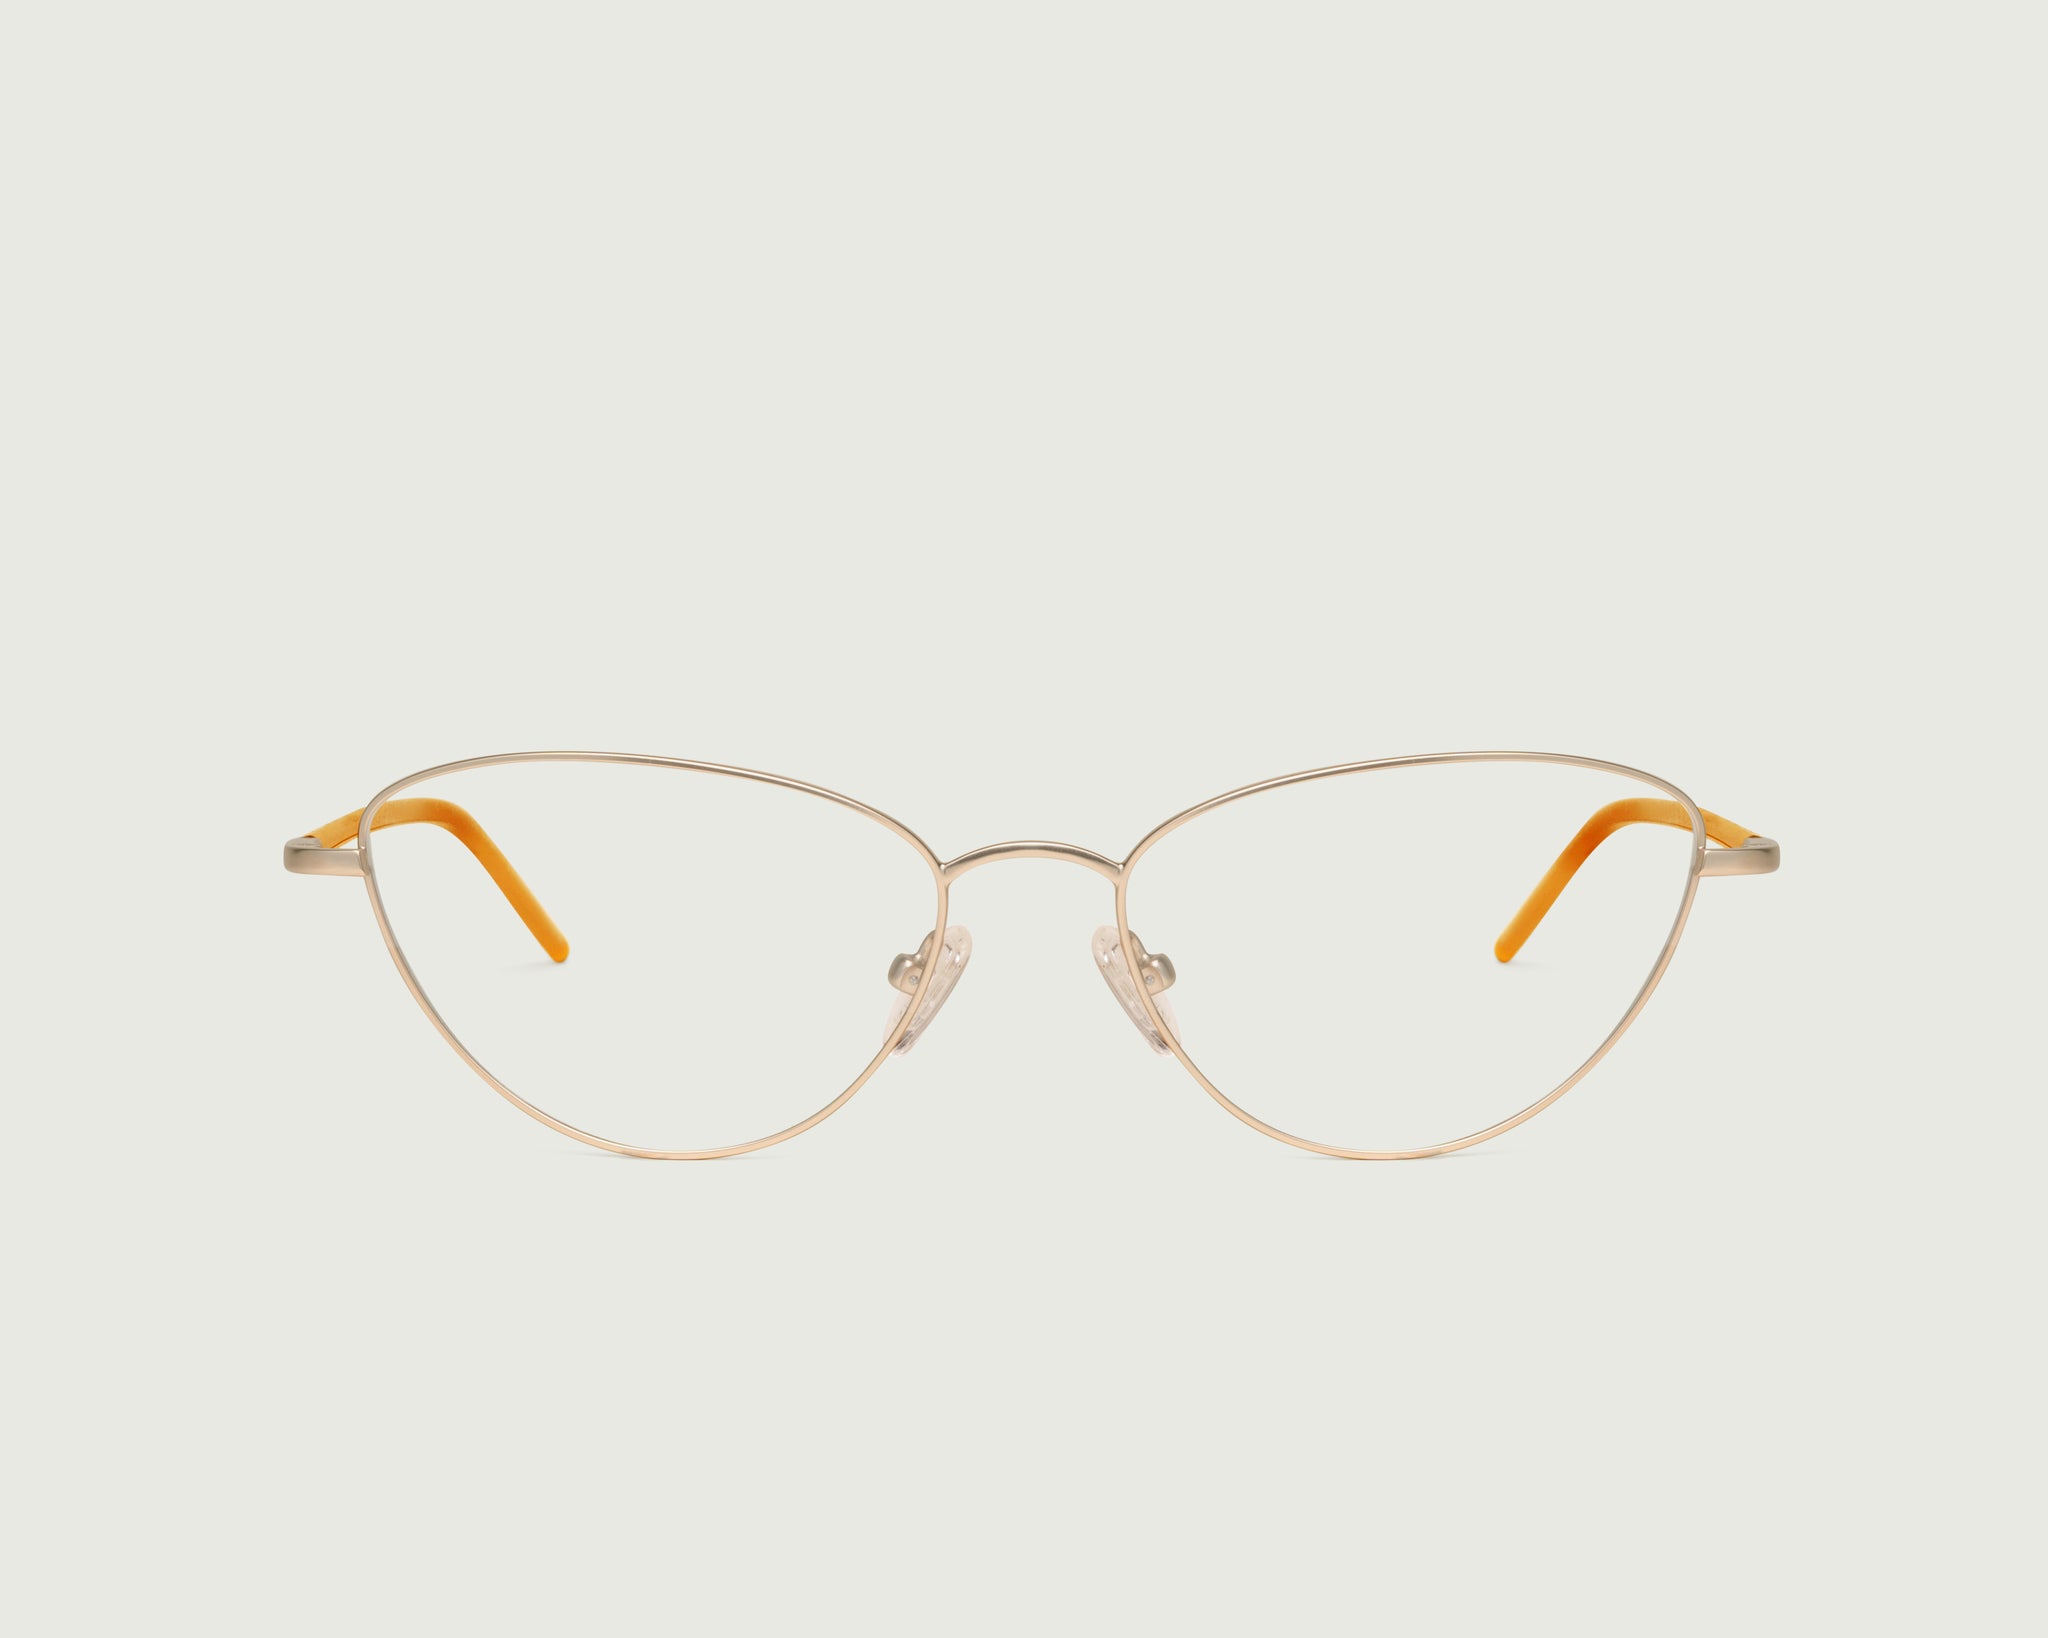 Tinsel::Phoebe Eyeglasses cateye gold metal front